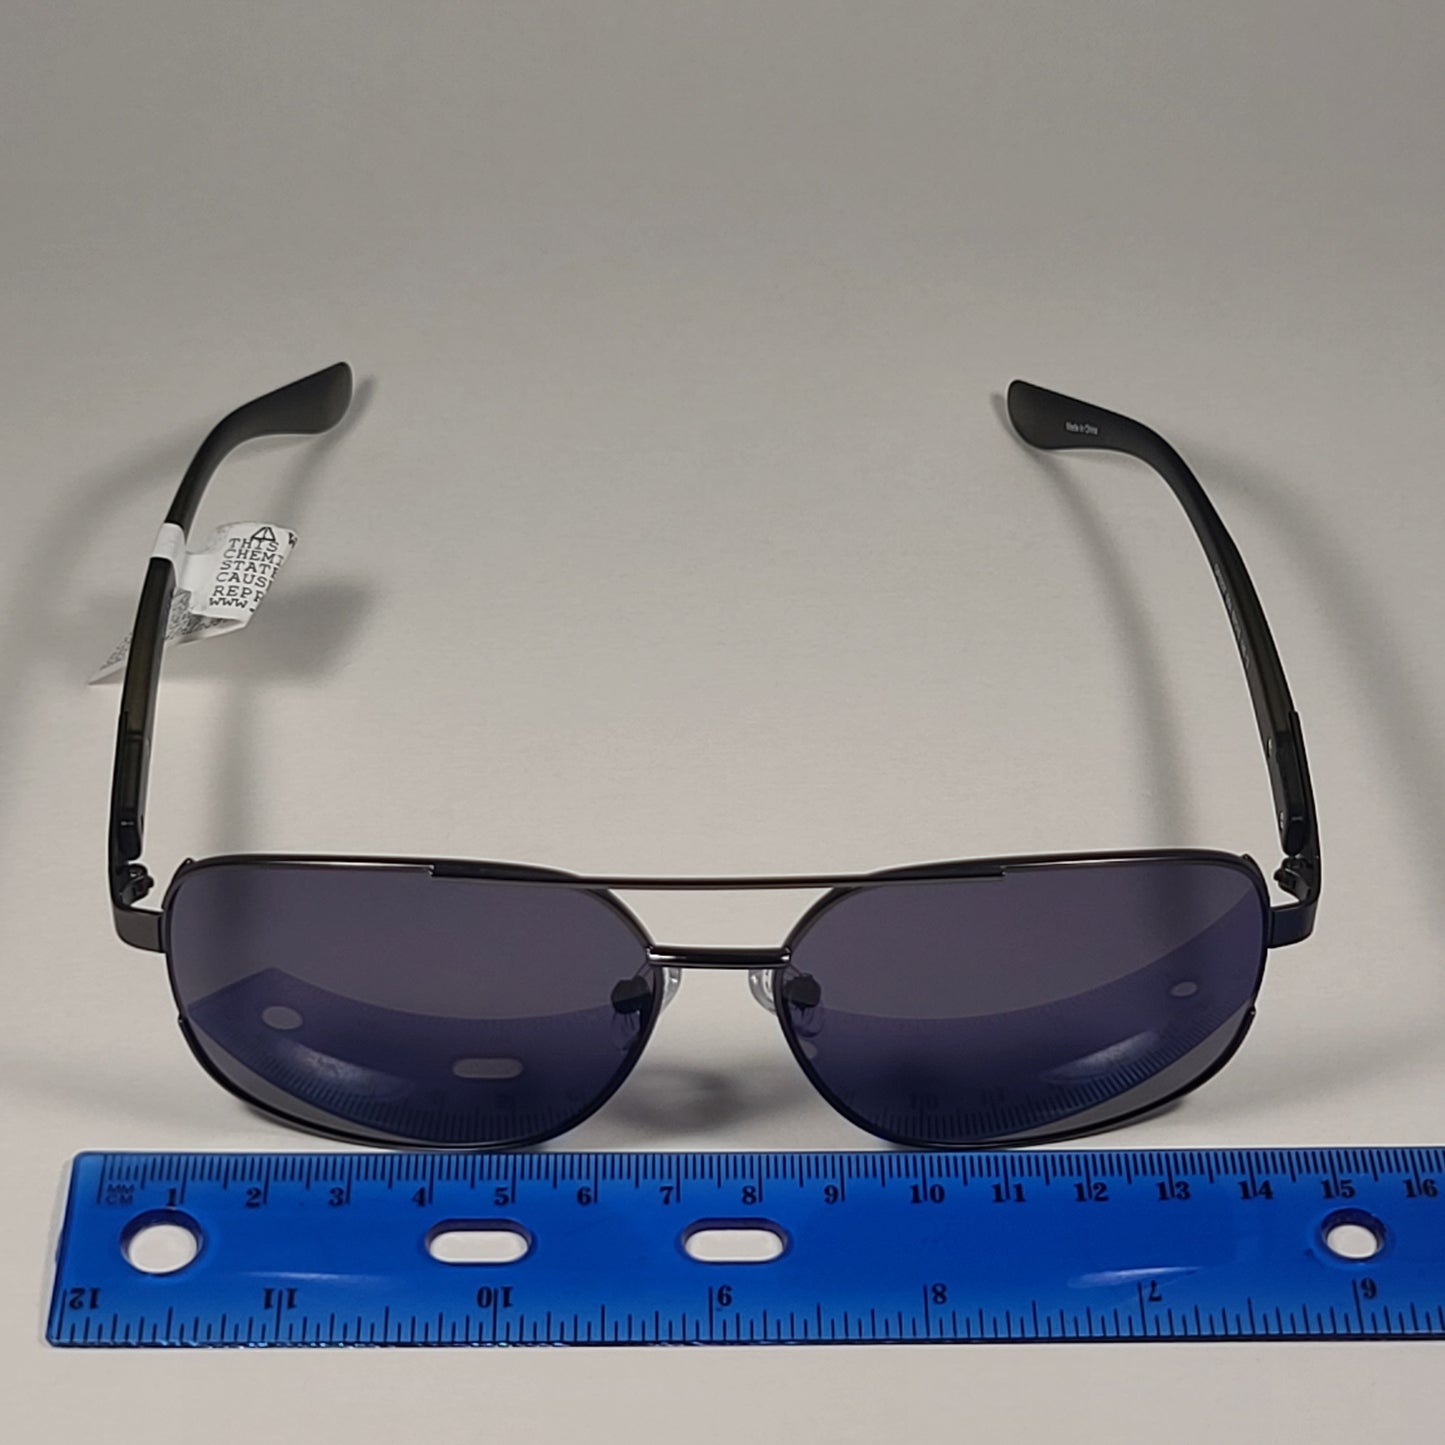 Guess Navigator Sunglasses Gunmetal Matte Black Frame Gray Lens GF0227 08A - Sunglasses